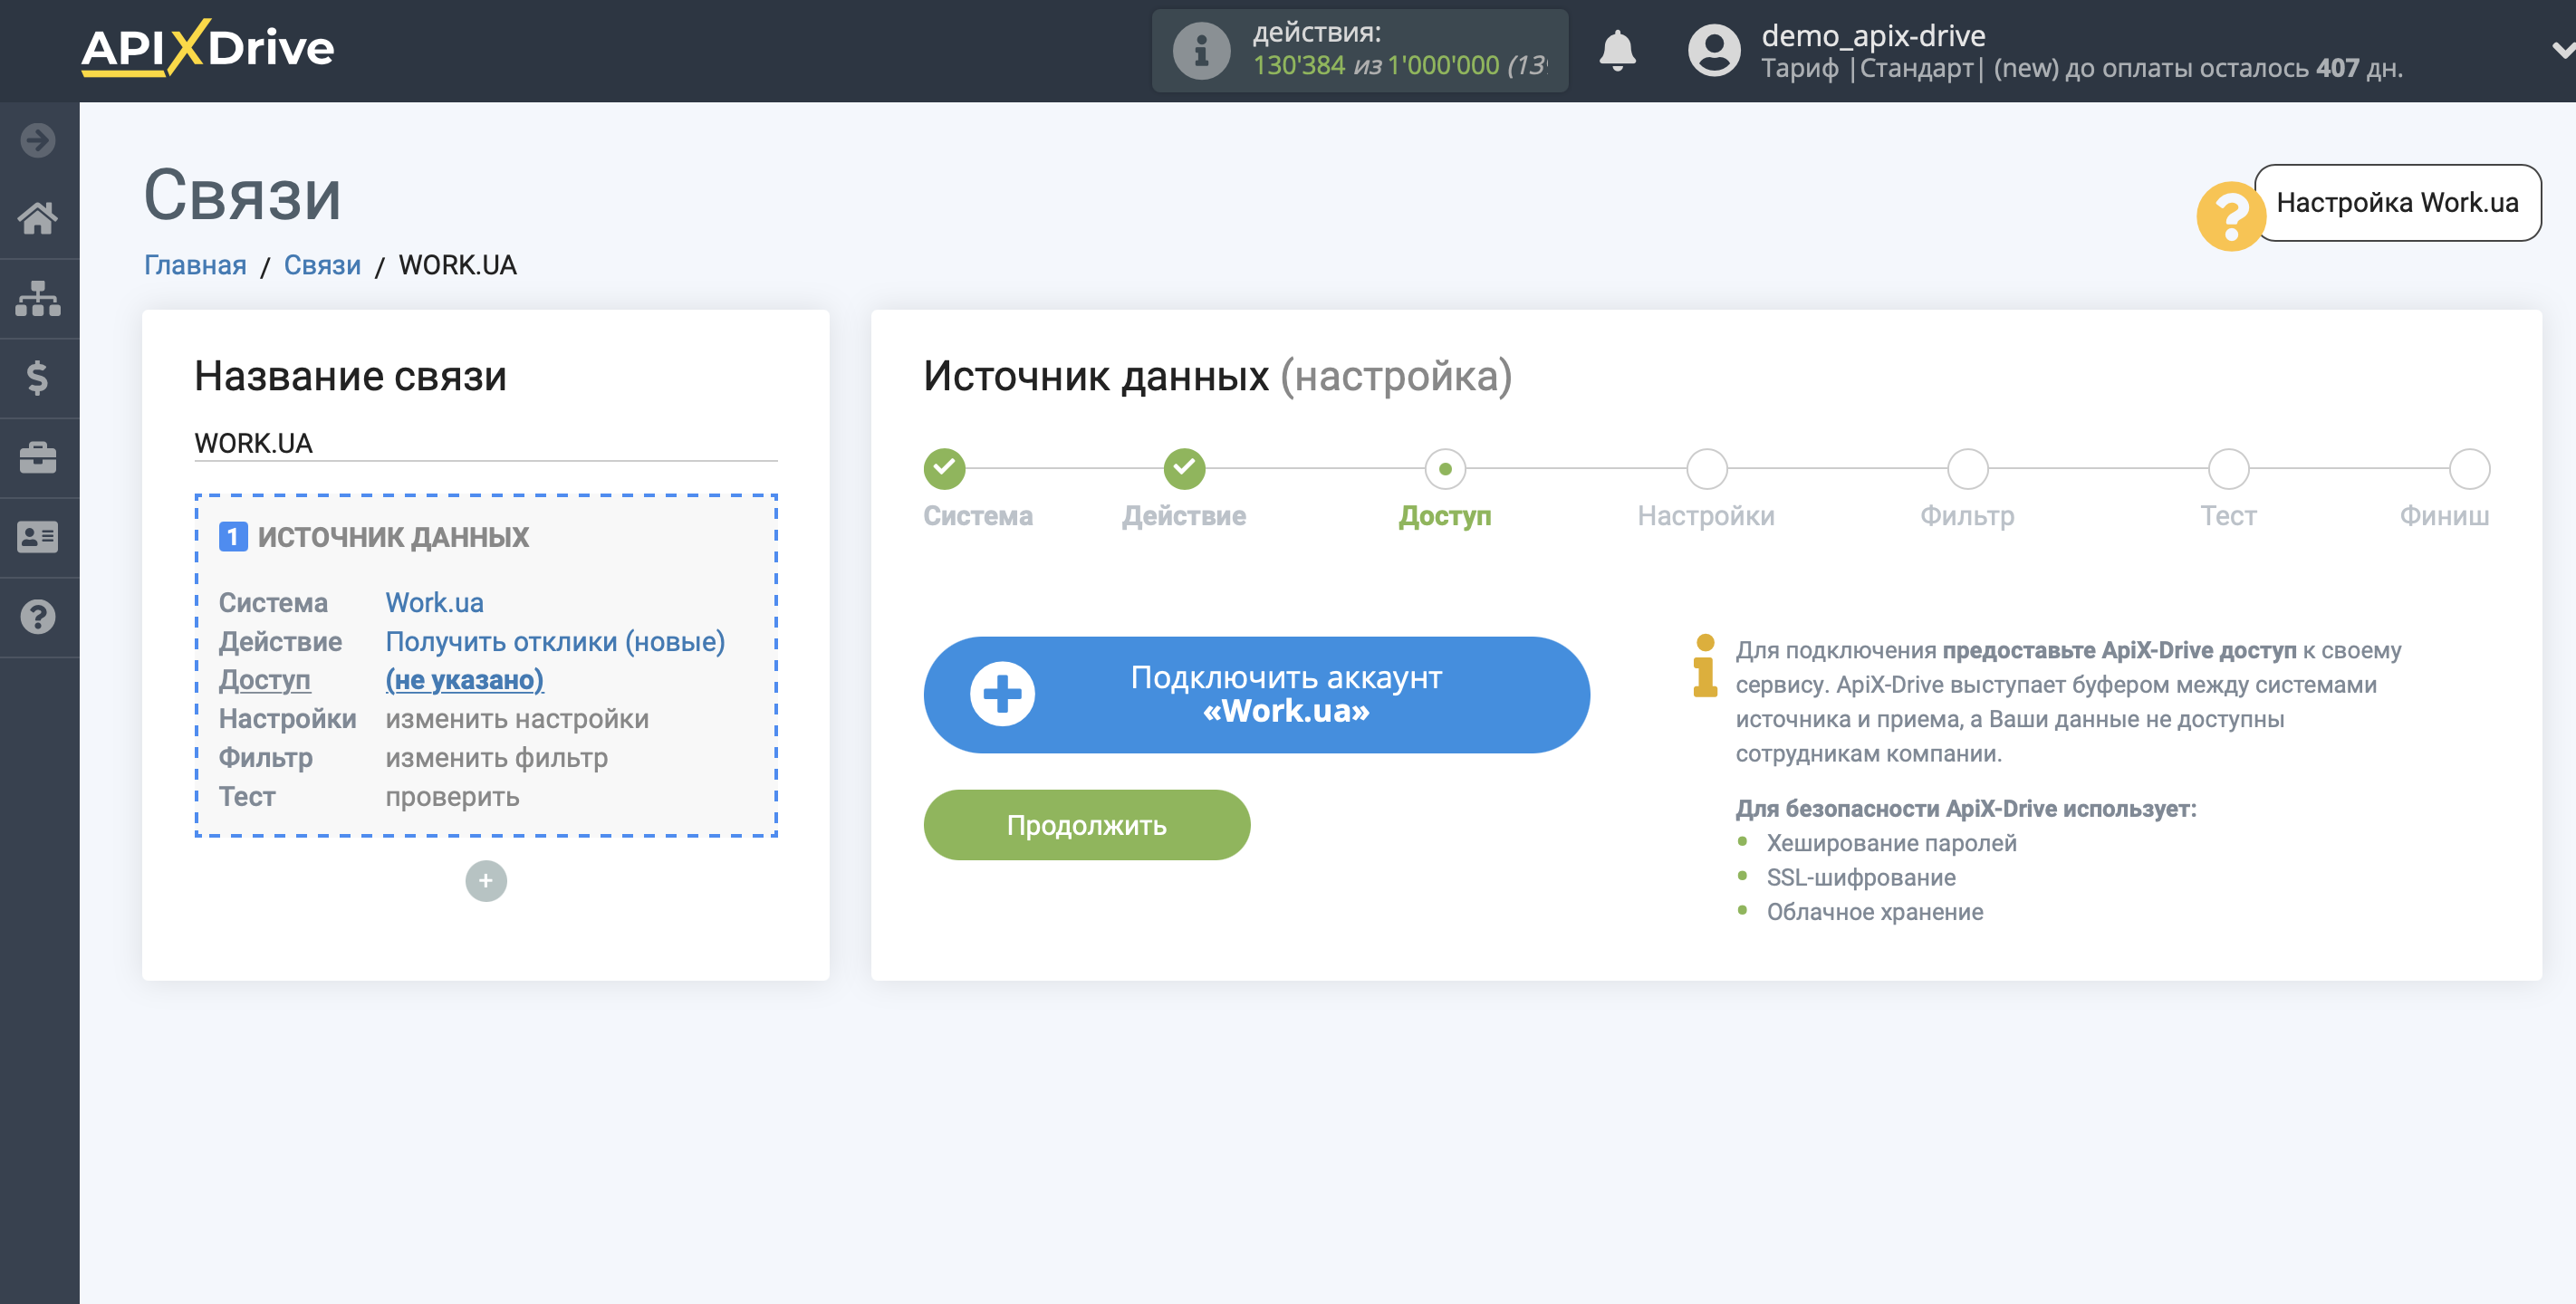 Настройка Work.ua | Подключение аккаунта системы источника